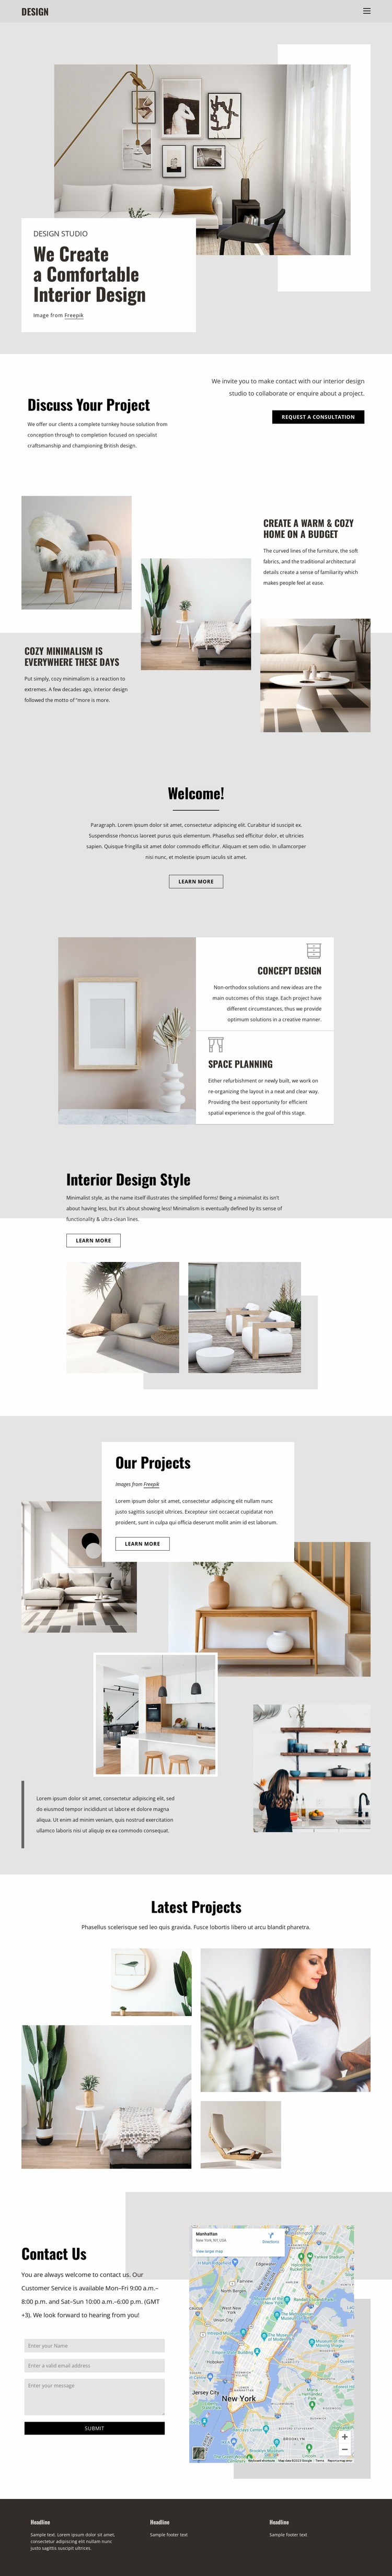 Designing Spaces and building dreams Website Mockup